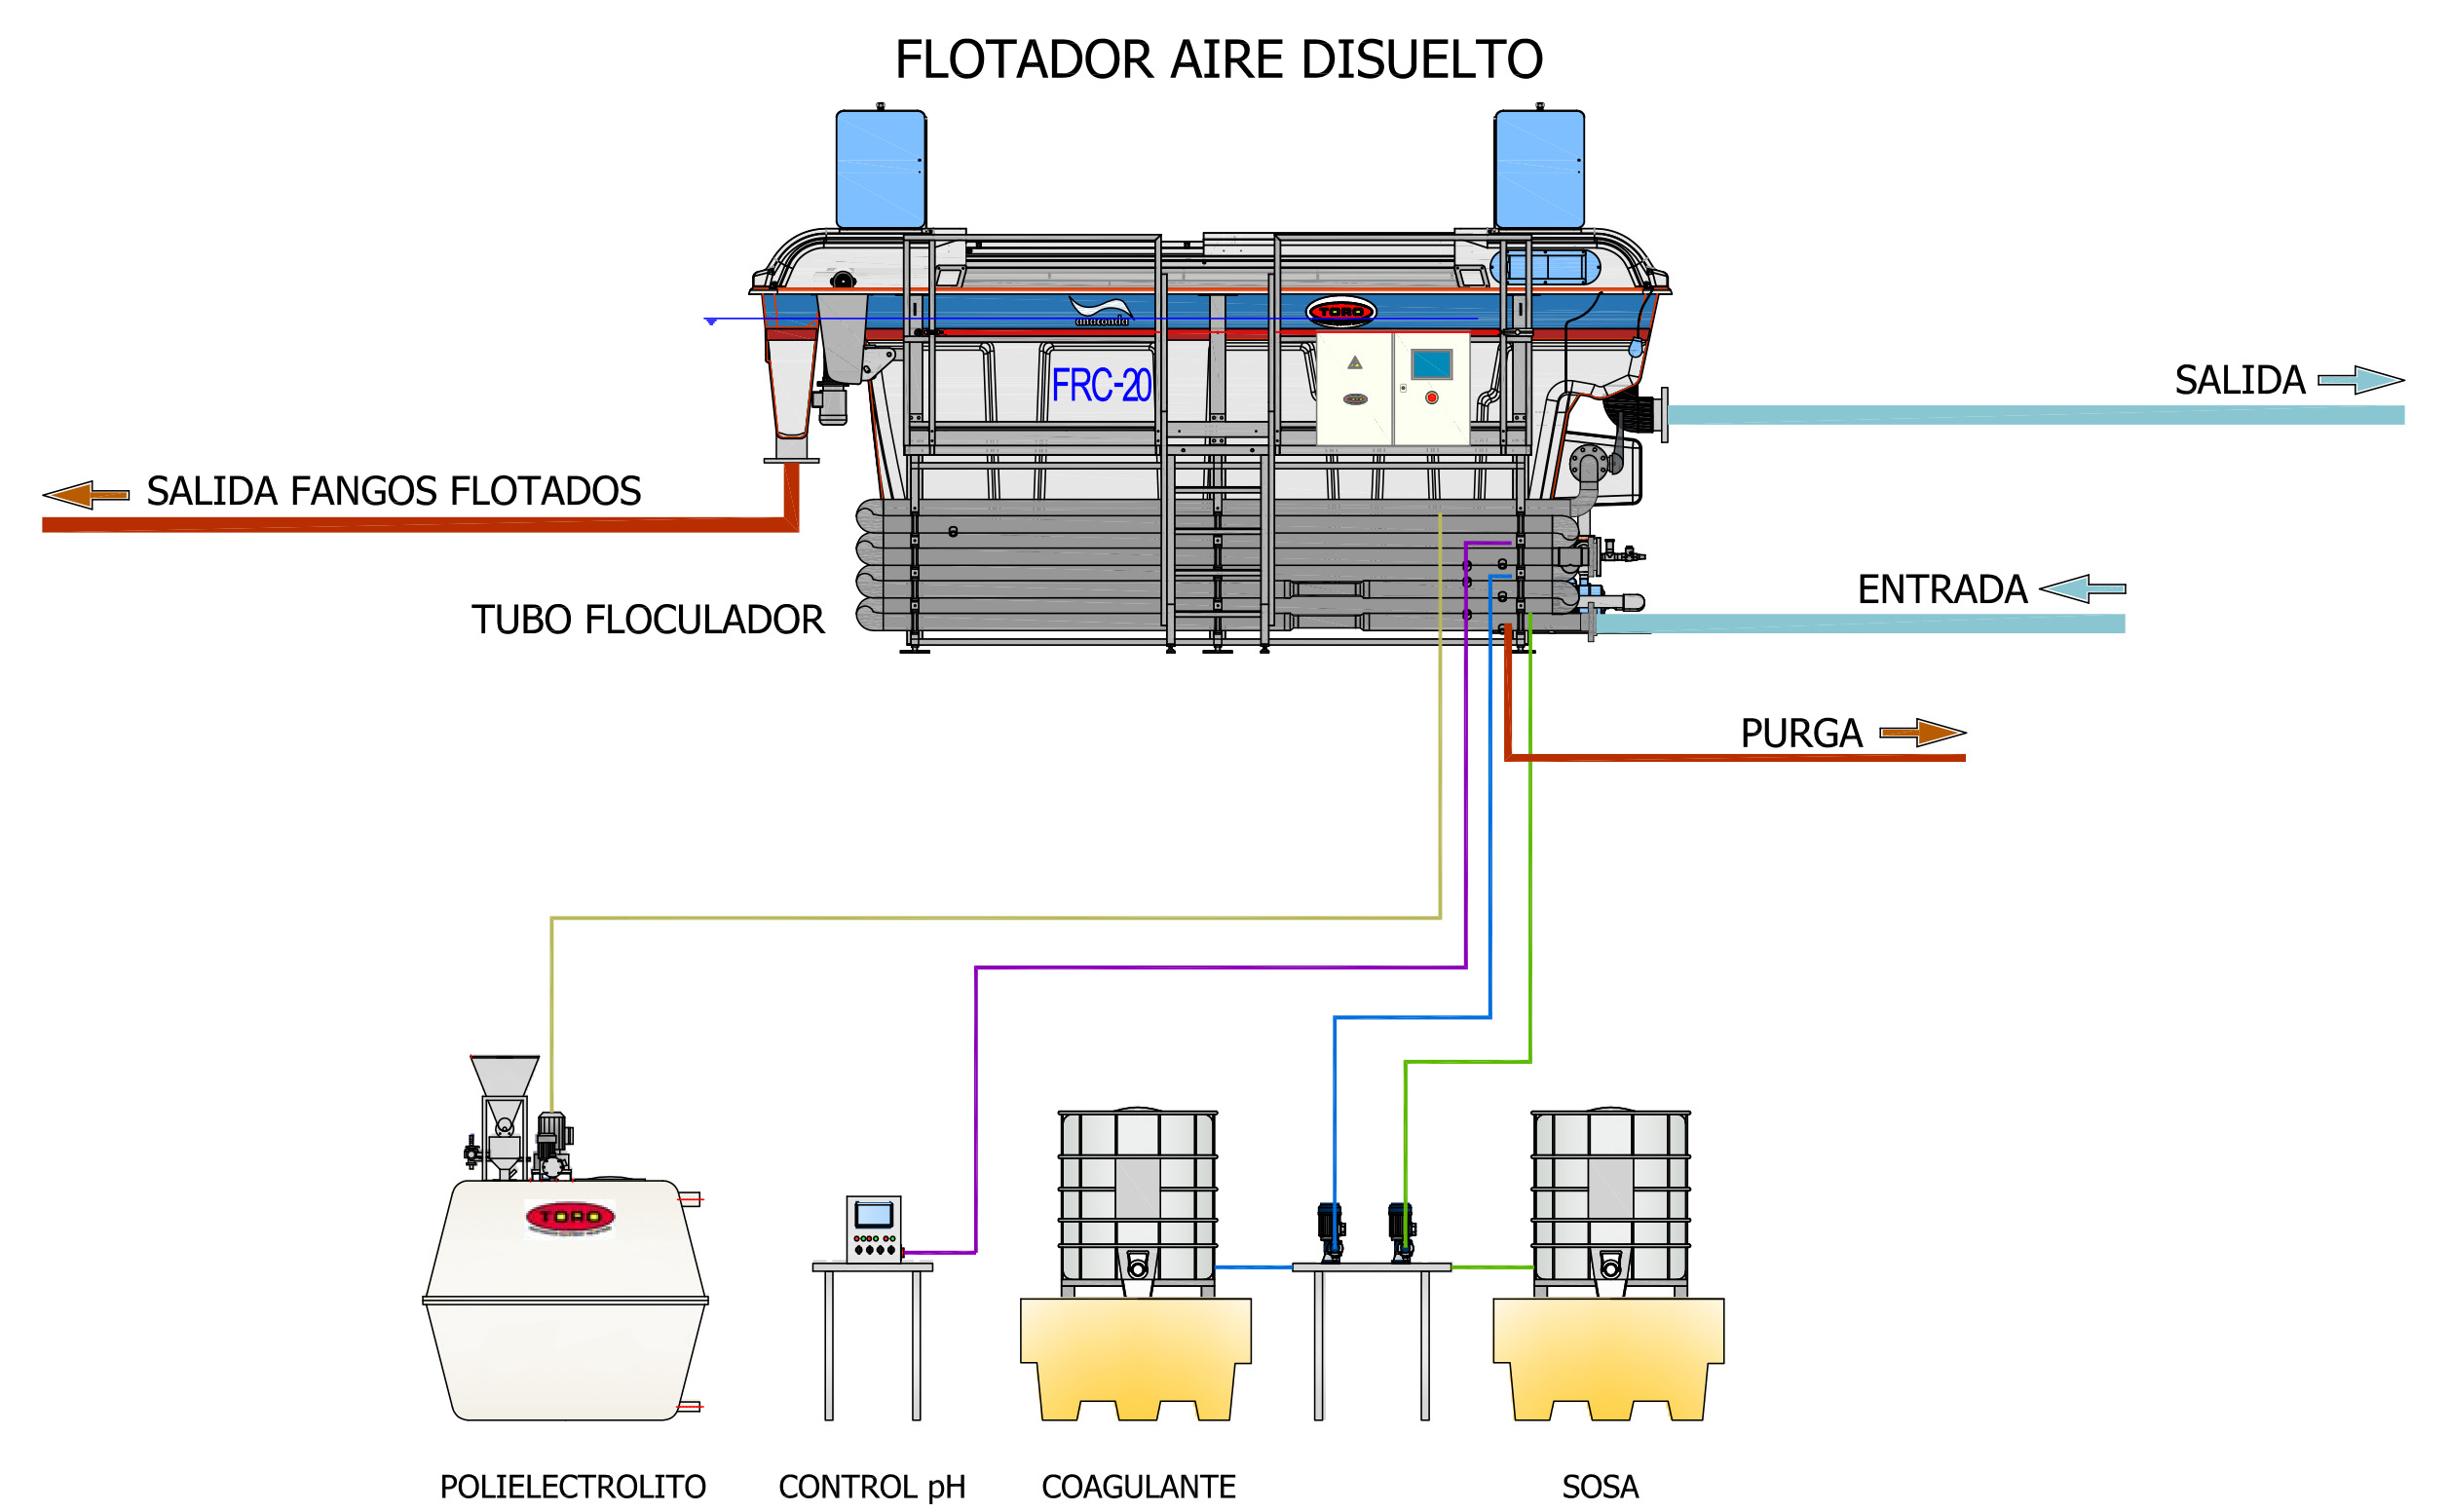 Toro Equipment Descripcion del proceso Flotador por aire disuelt